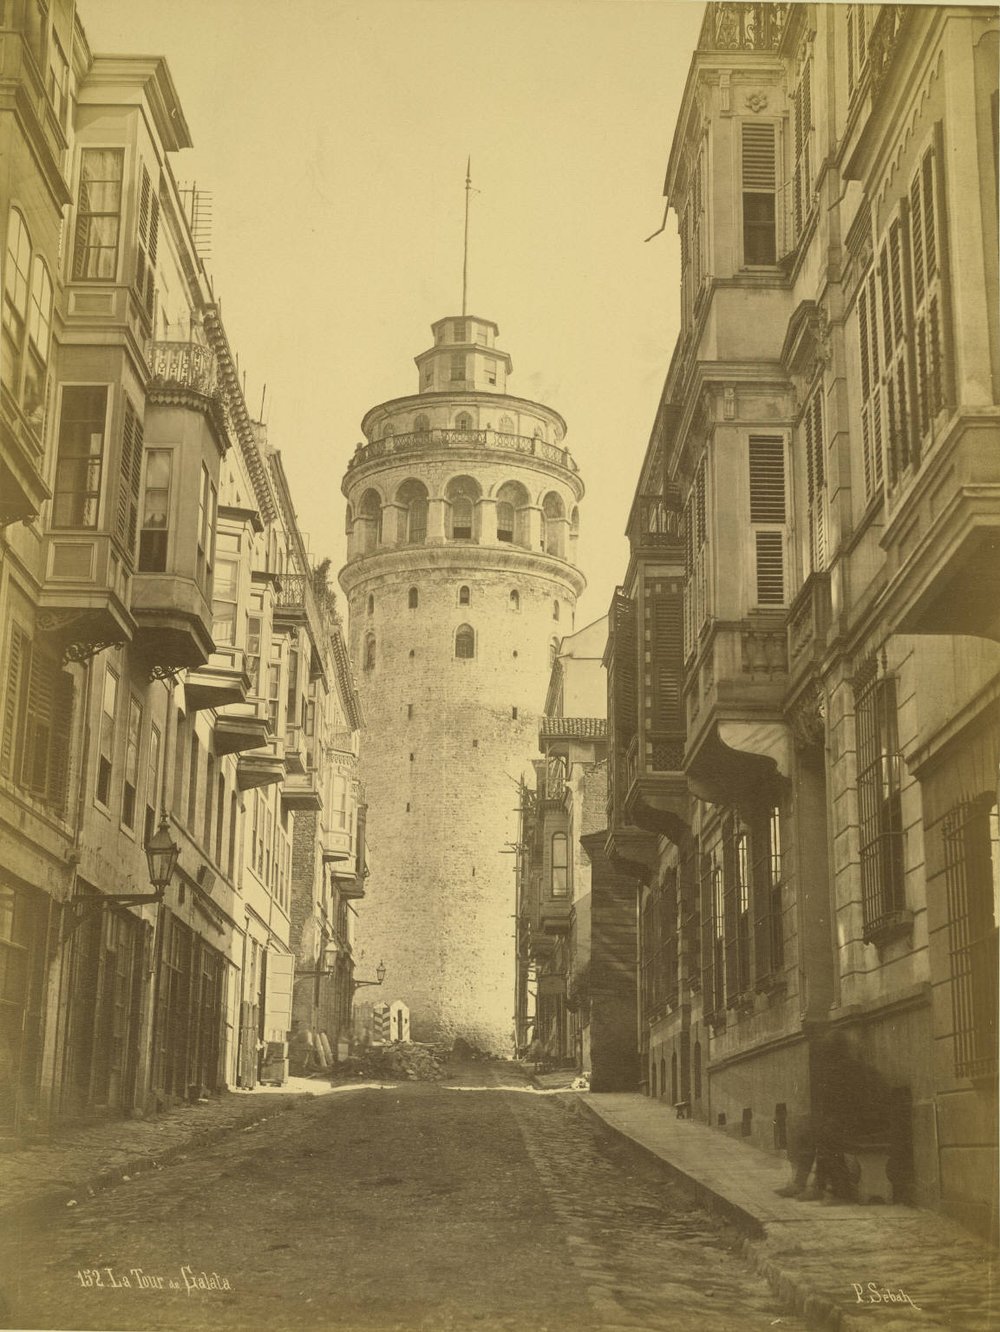  Pascal Sebah, Galata Tower seen from the Büyükhendek Street, 1870s, photo in public domain. 